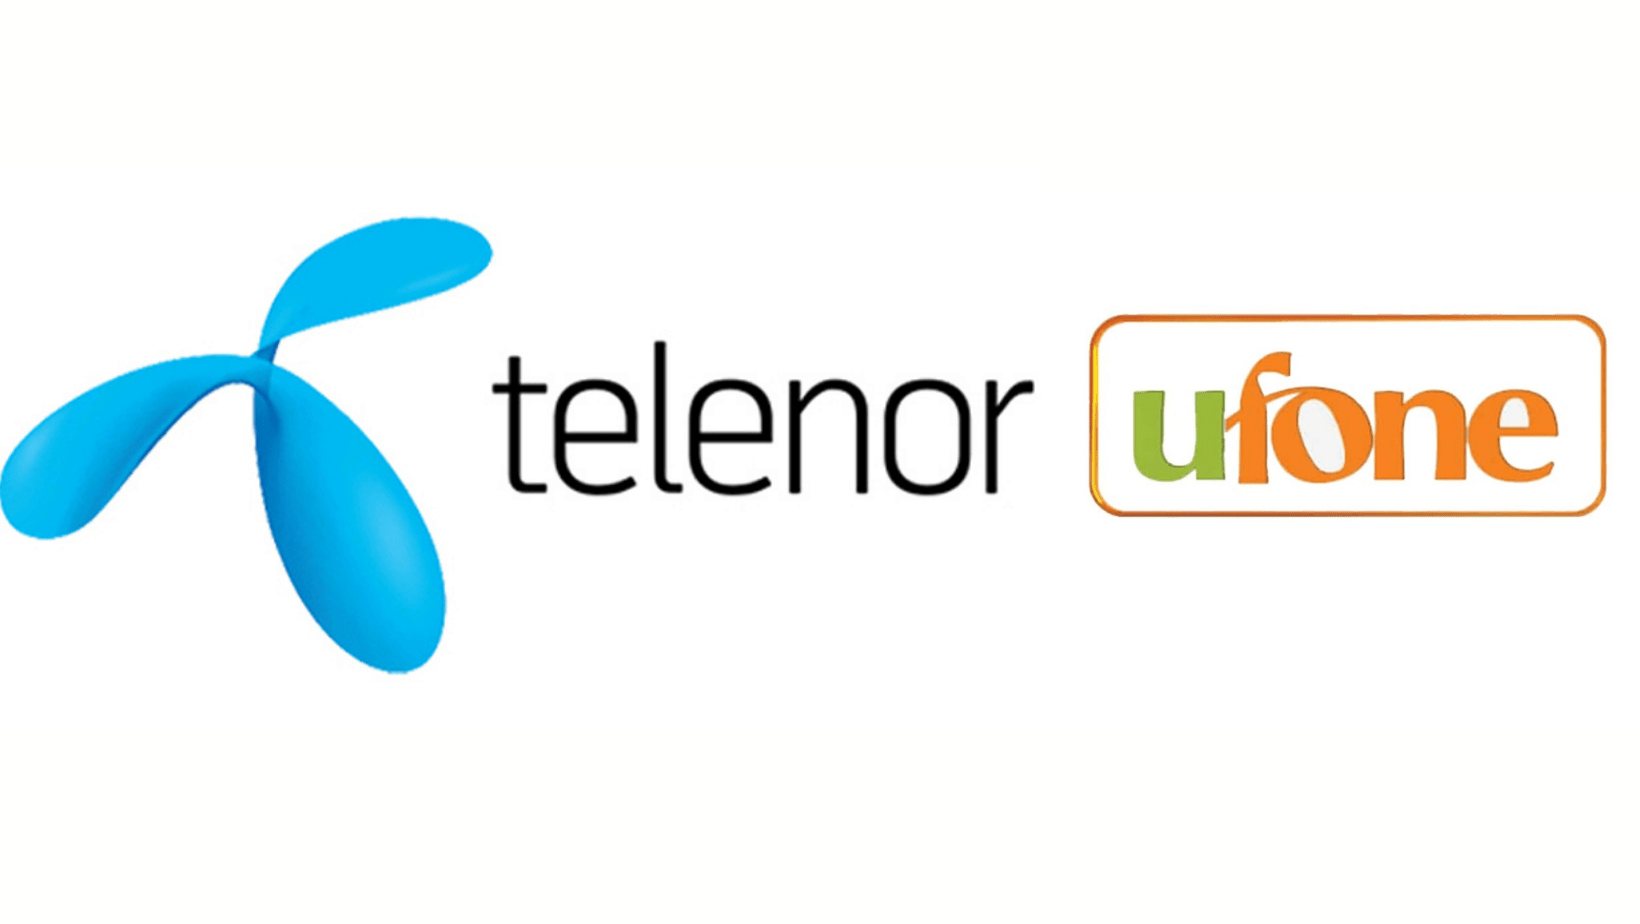 Telenor Ufone merger